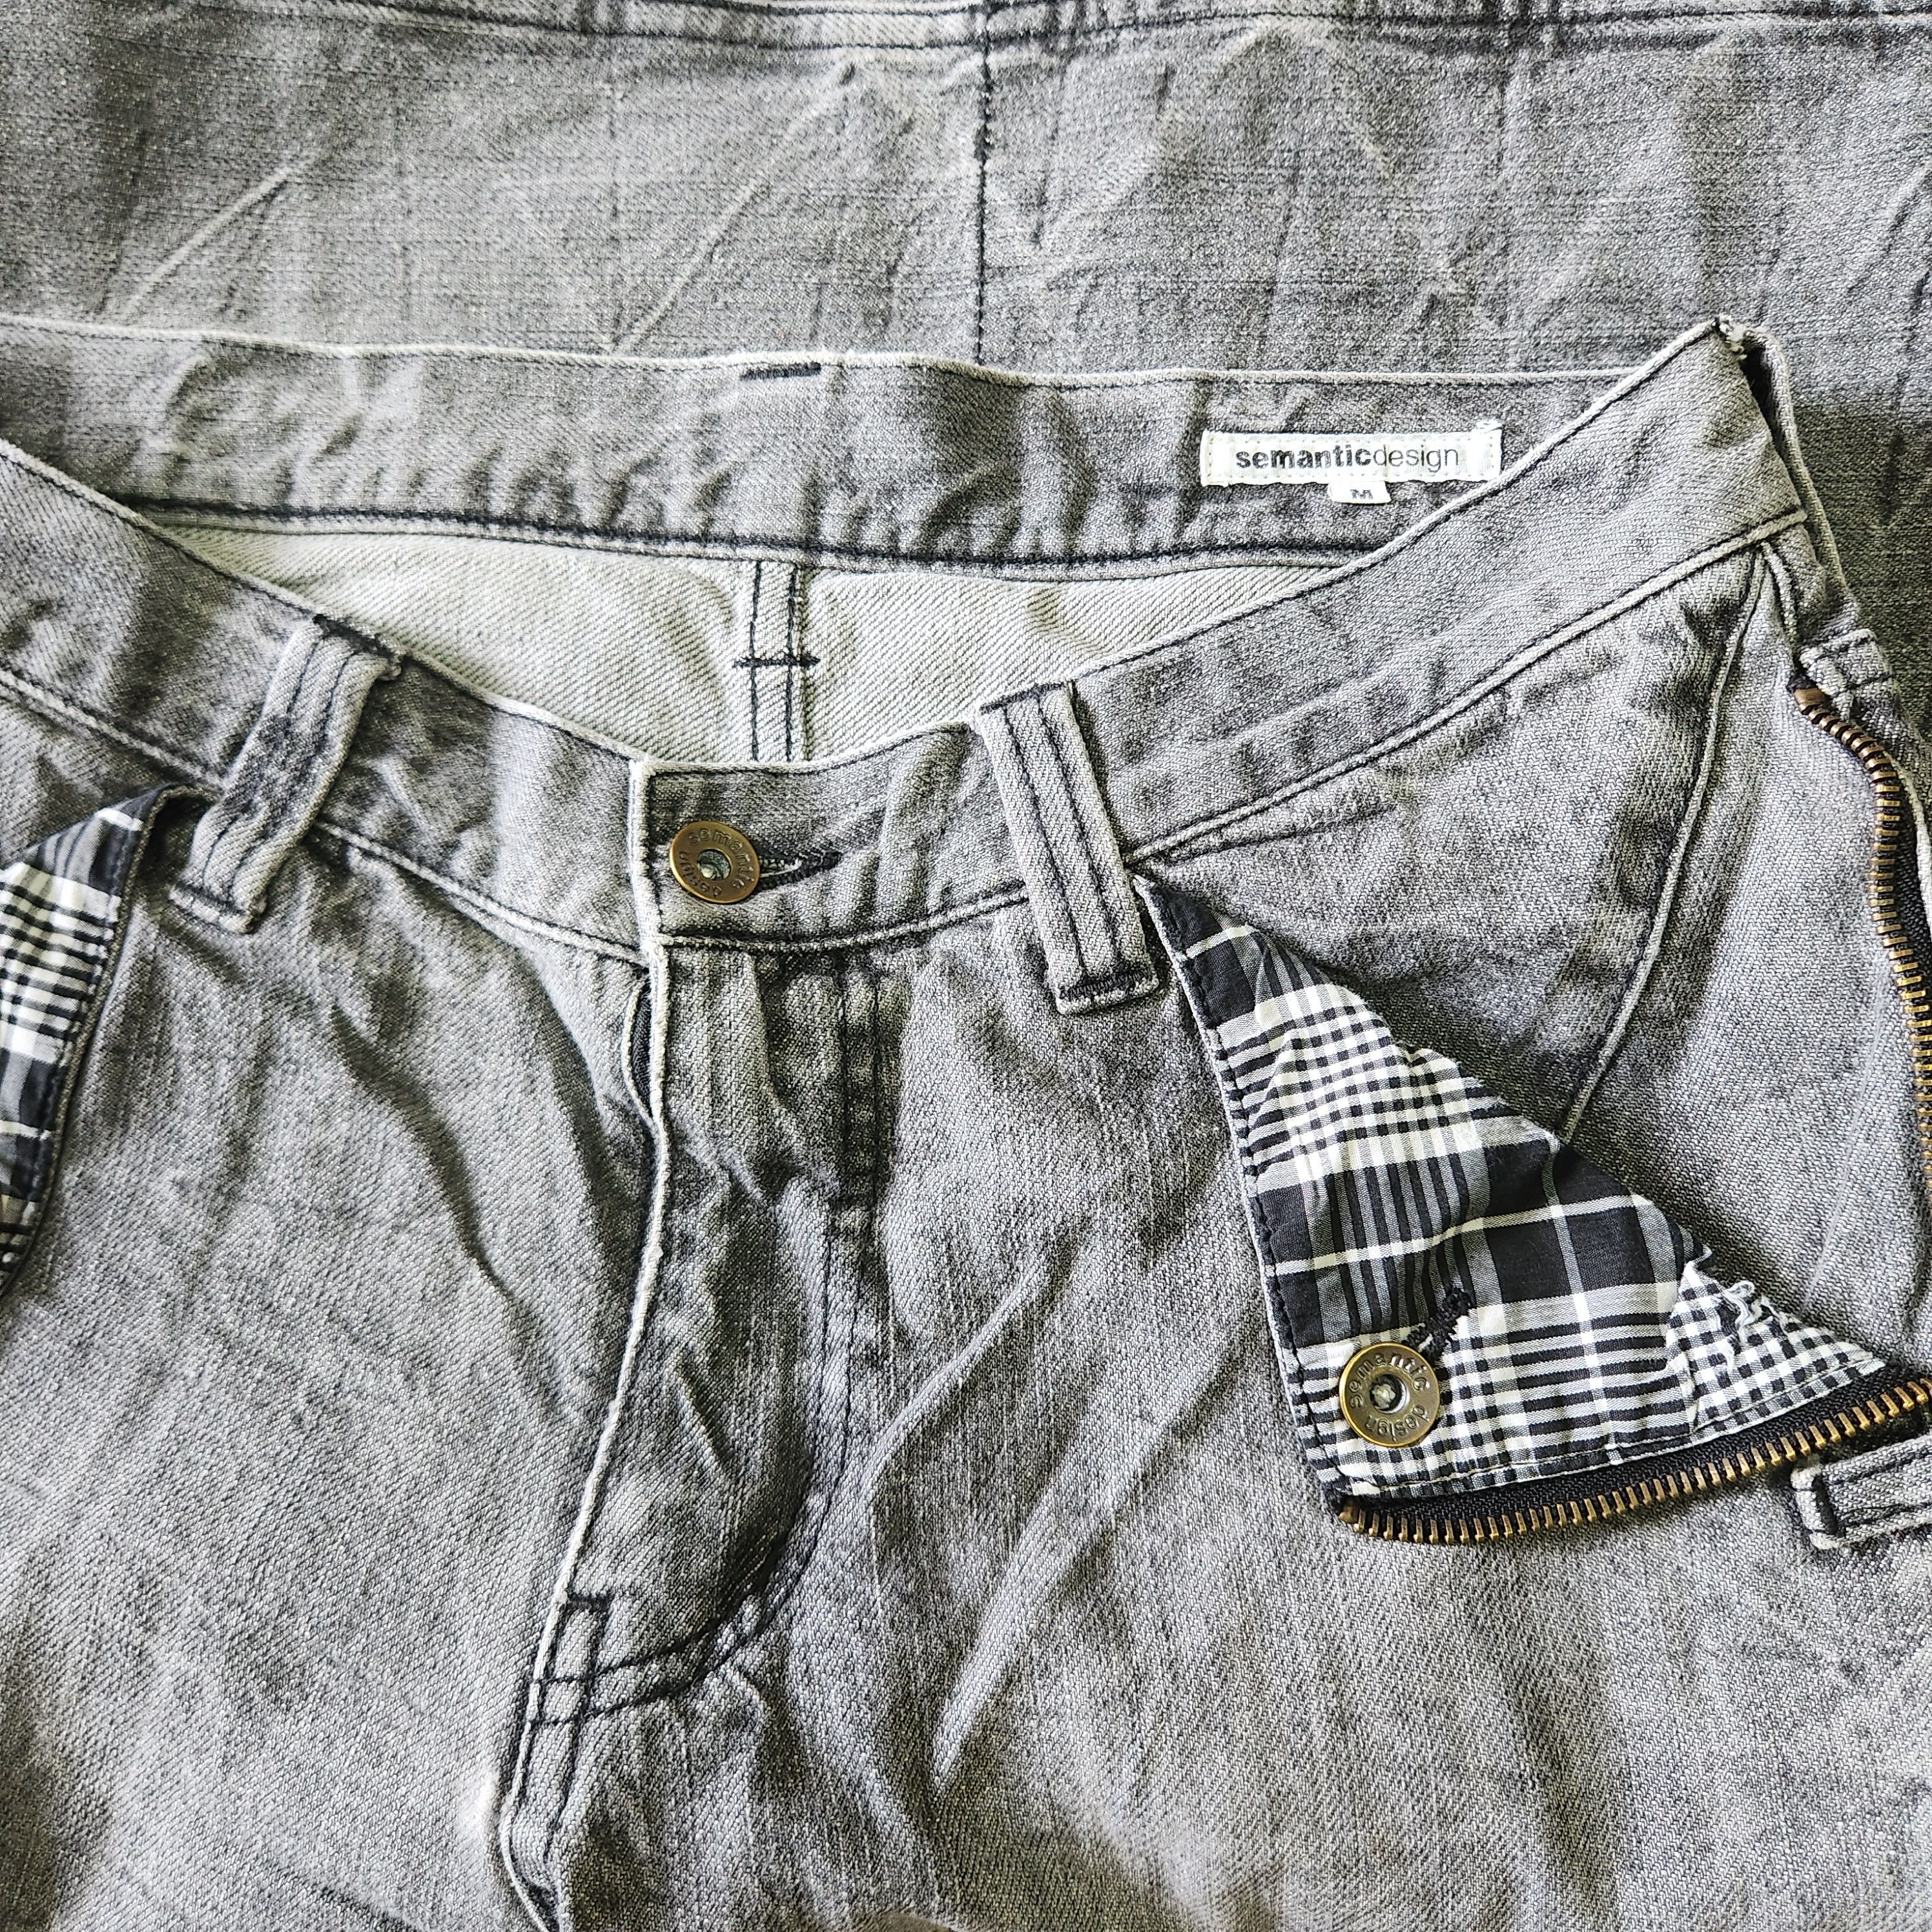 Semantic Design Hysteric Glamour Japan Denim Jeans - 7